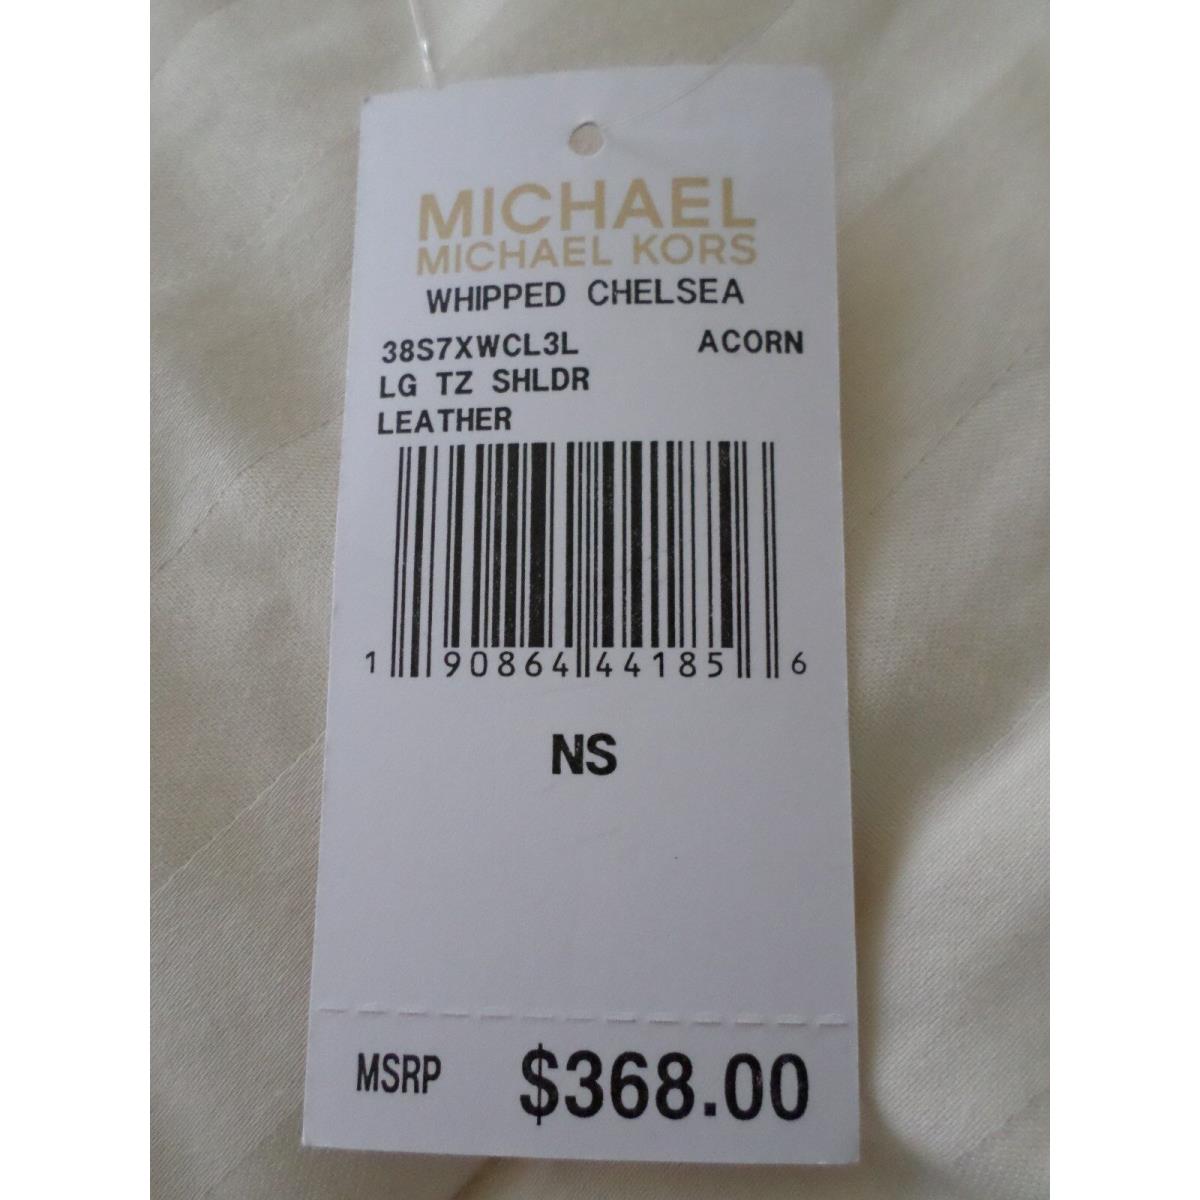 NWT Michael Kors WHIPPED CHELSEA Large TZ Shoulder Bag Acorn Leather  38S7XWCL3L